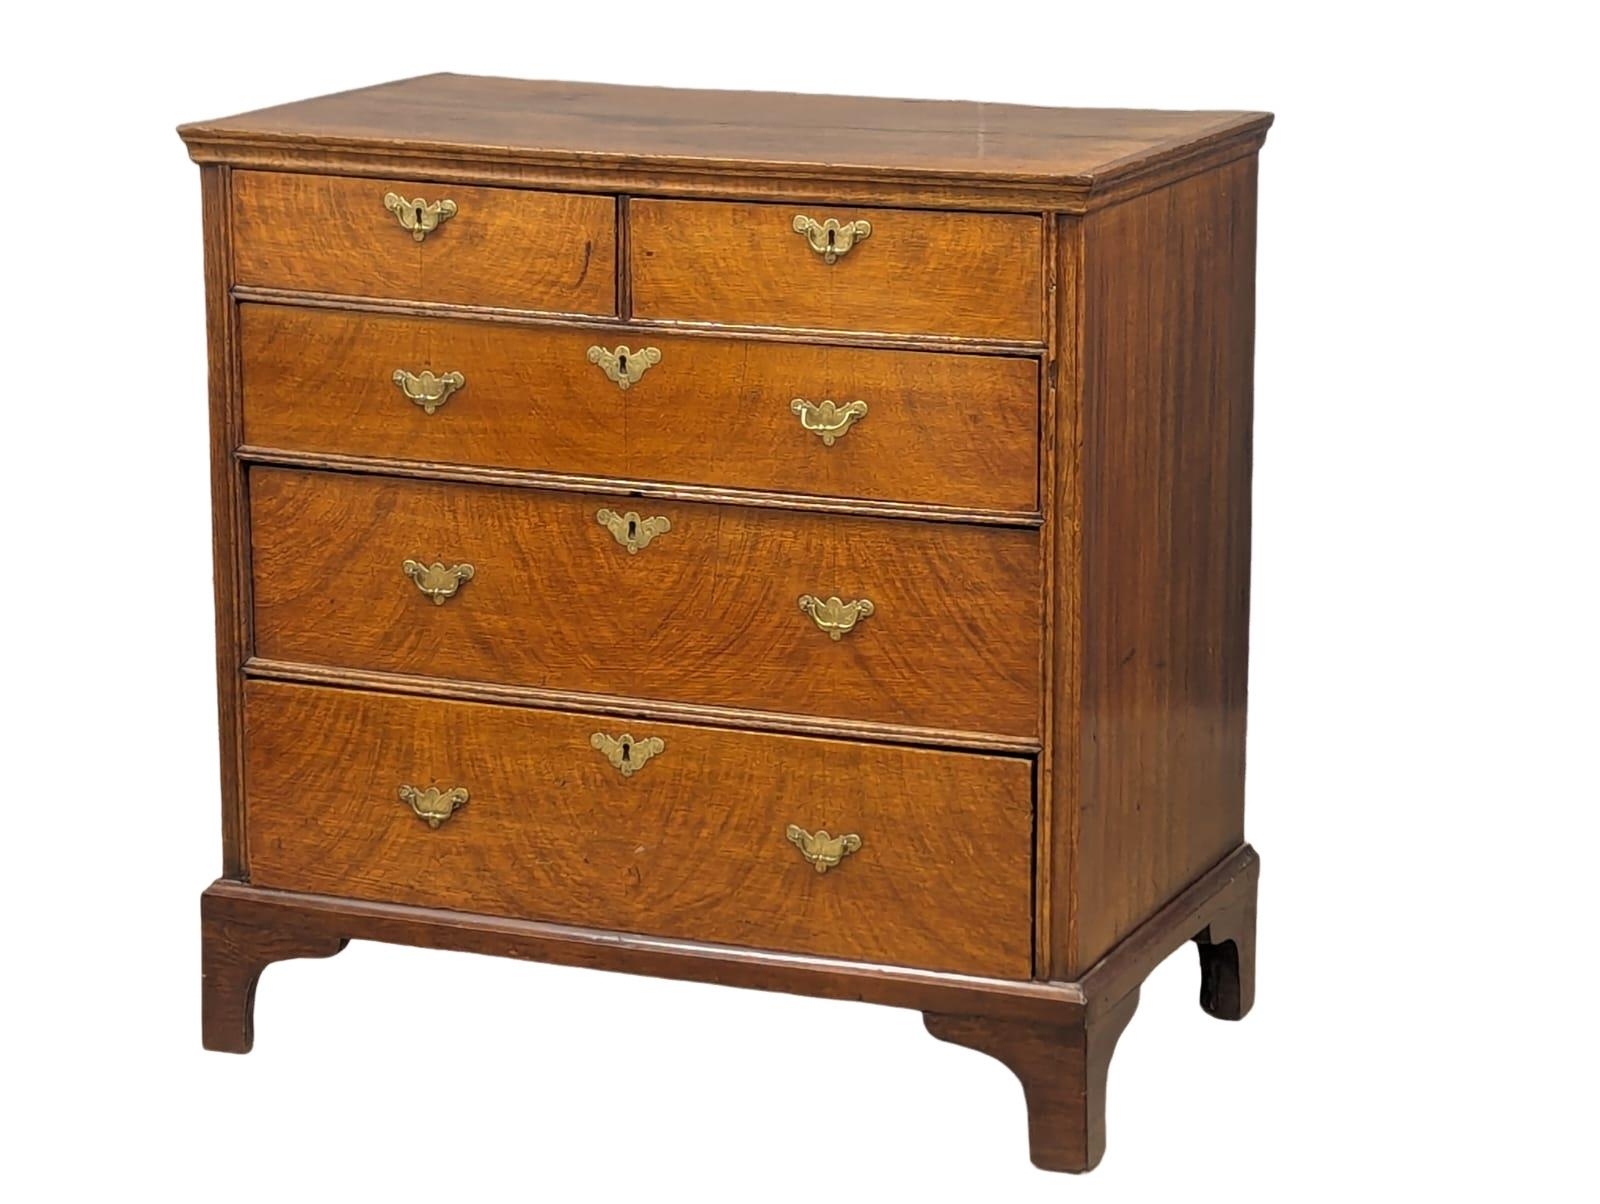 A George II oak chest of drawers with original handles and bracket feet, 94.5cm x 54.5cm x 94.5cm